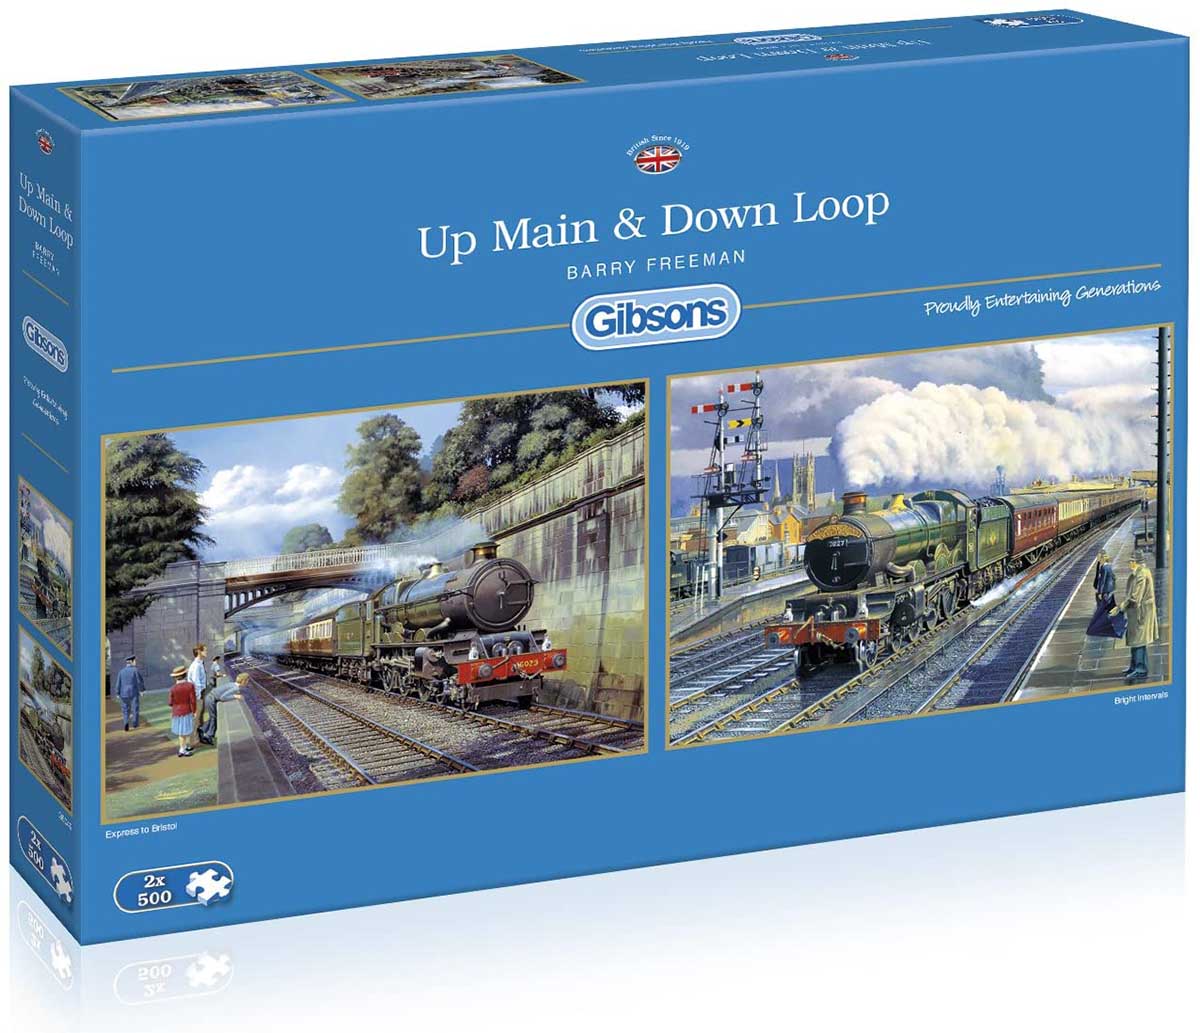 Up Main & Down Loop Train Jigsaw Puzzle